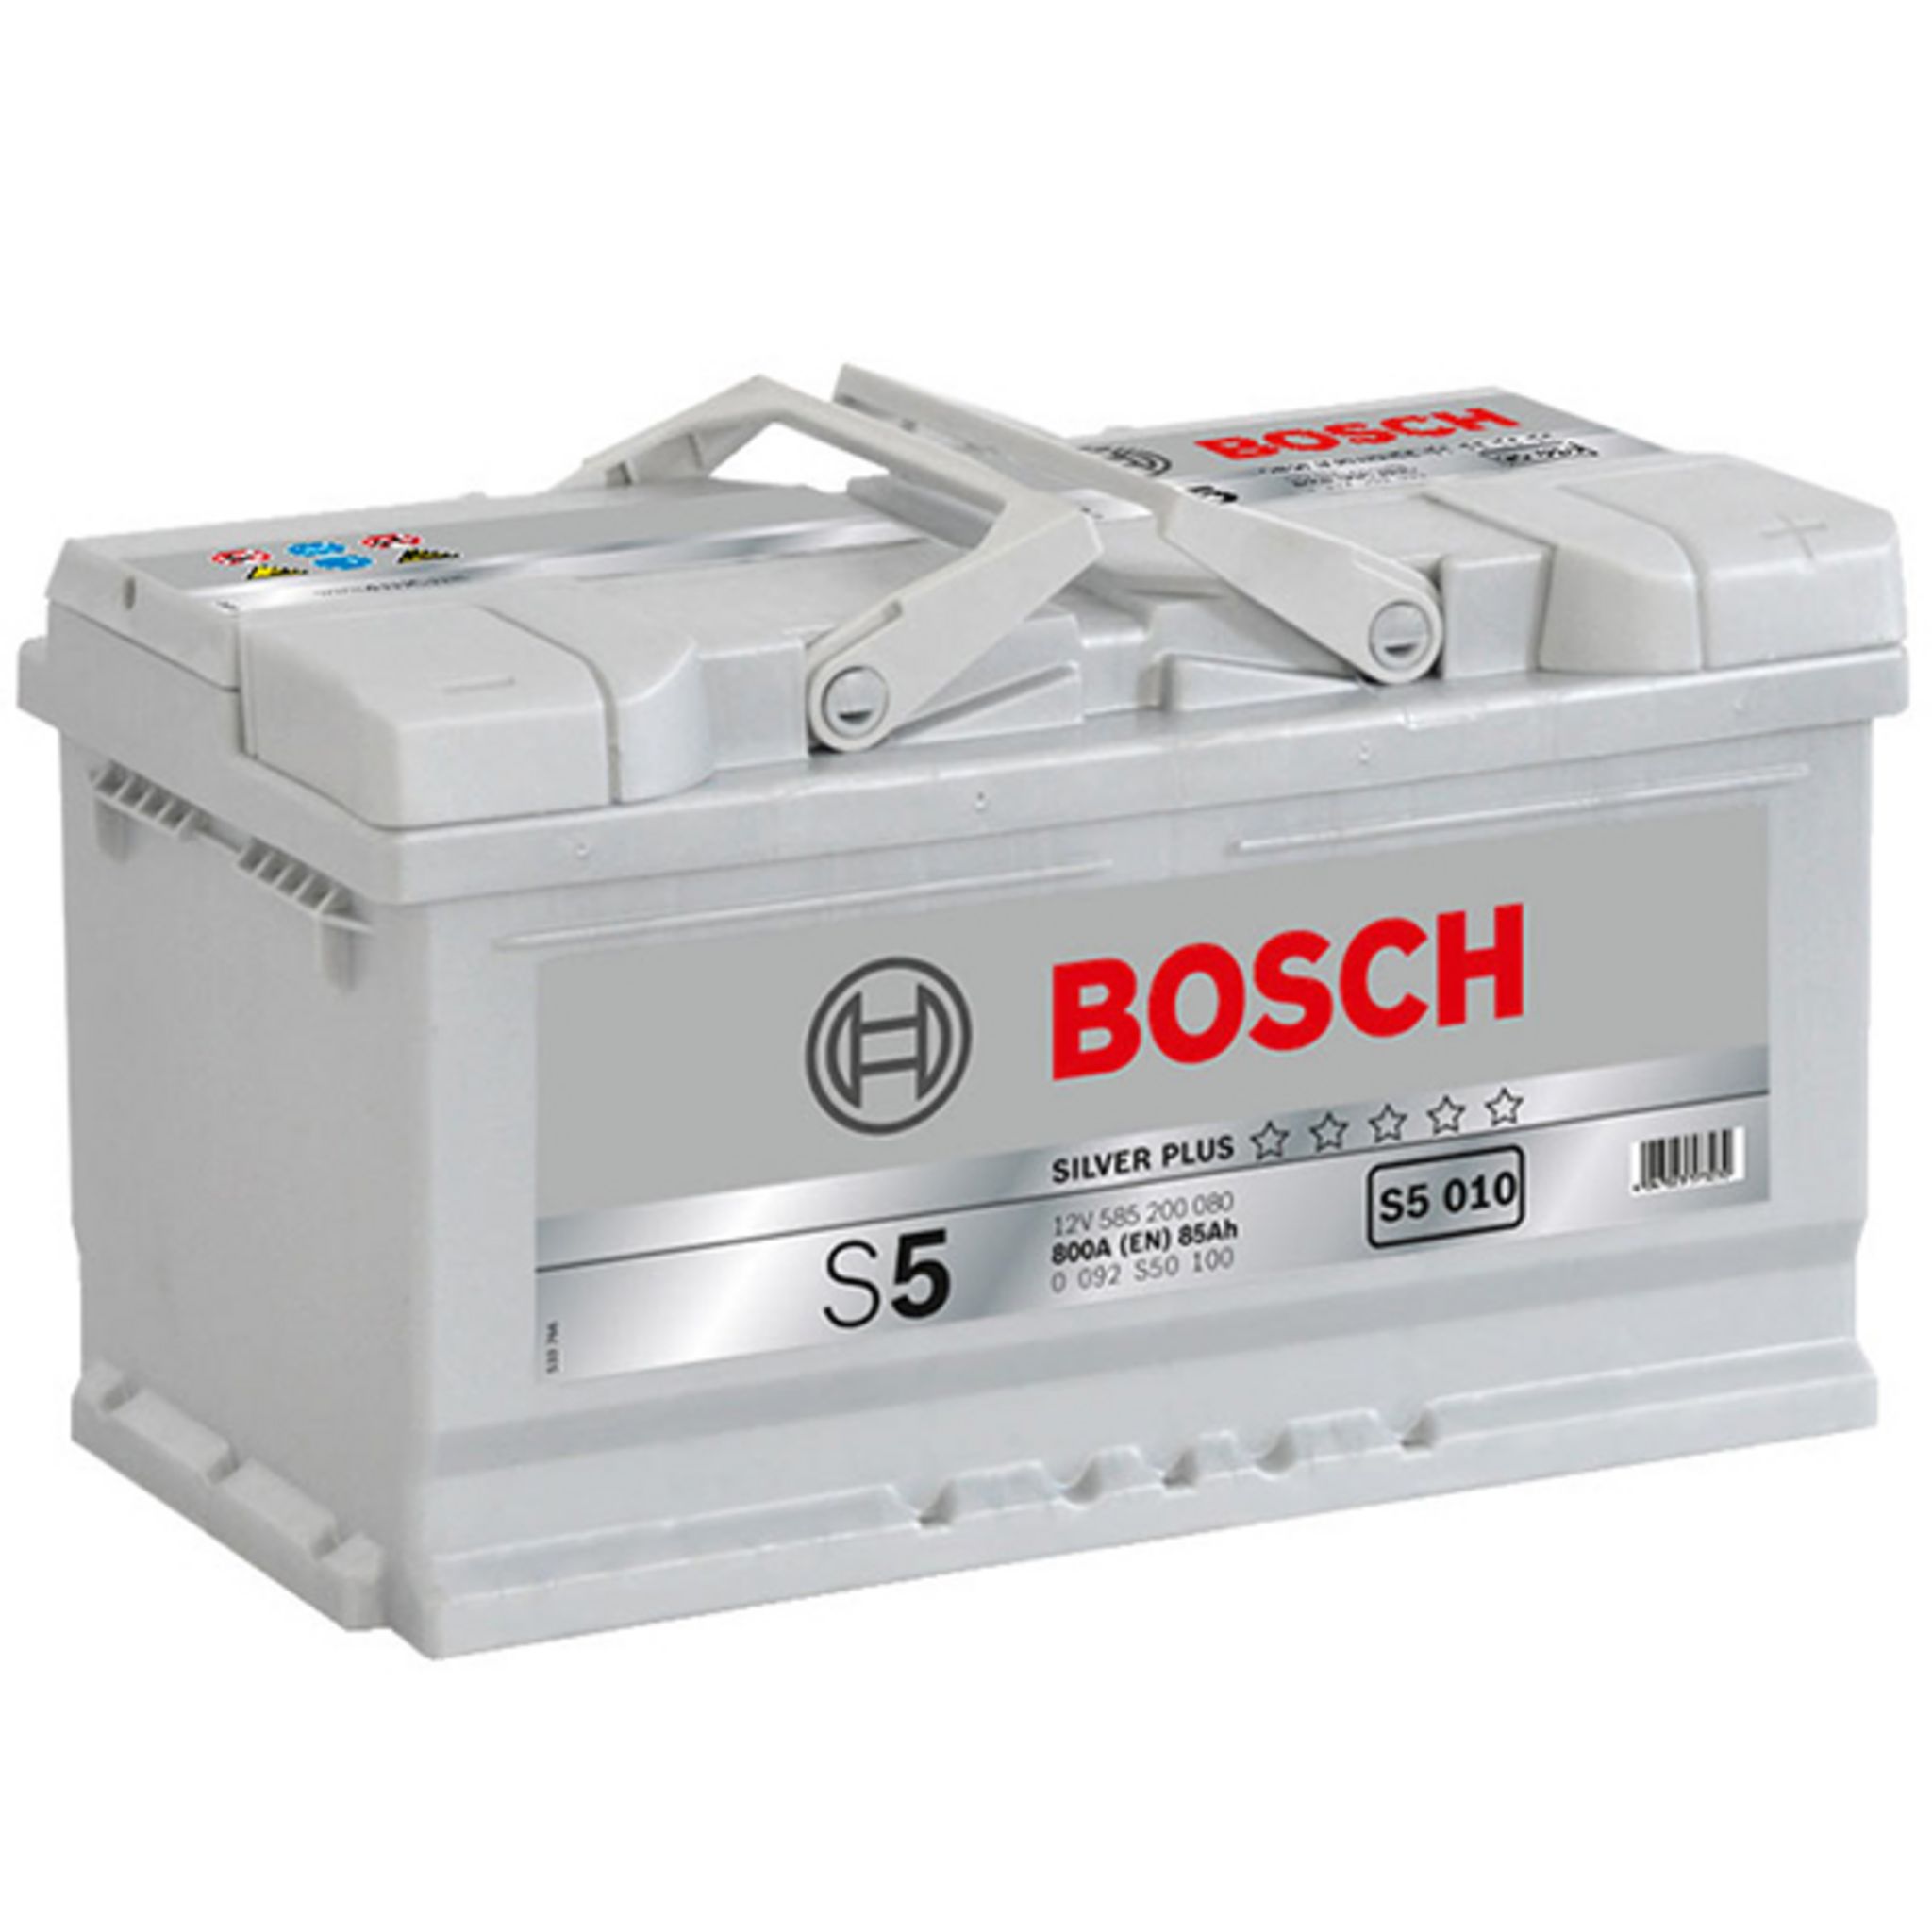 Аккумулятор автомобильный большой. 0092s50100 Bosch аккумулятор автомобильный. 0092s50150 Bosch. Аккумулятор Bosch 0092s50040. Аккумулятор Bosch 0092s30020.